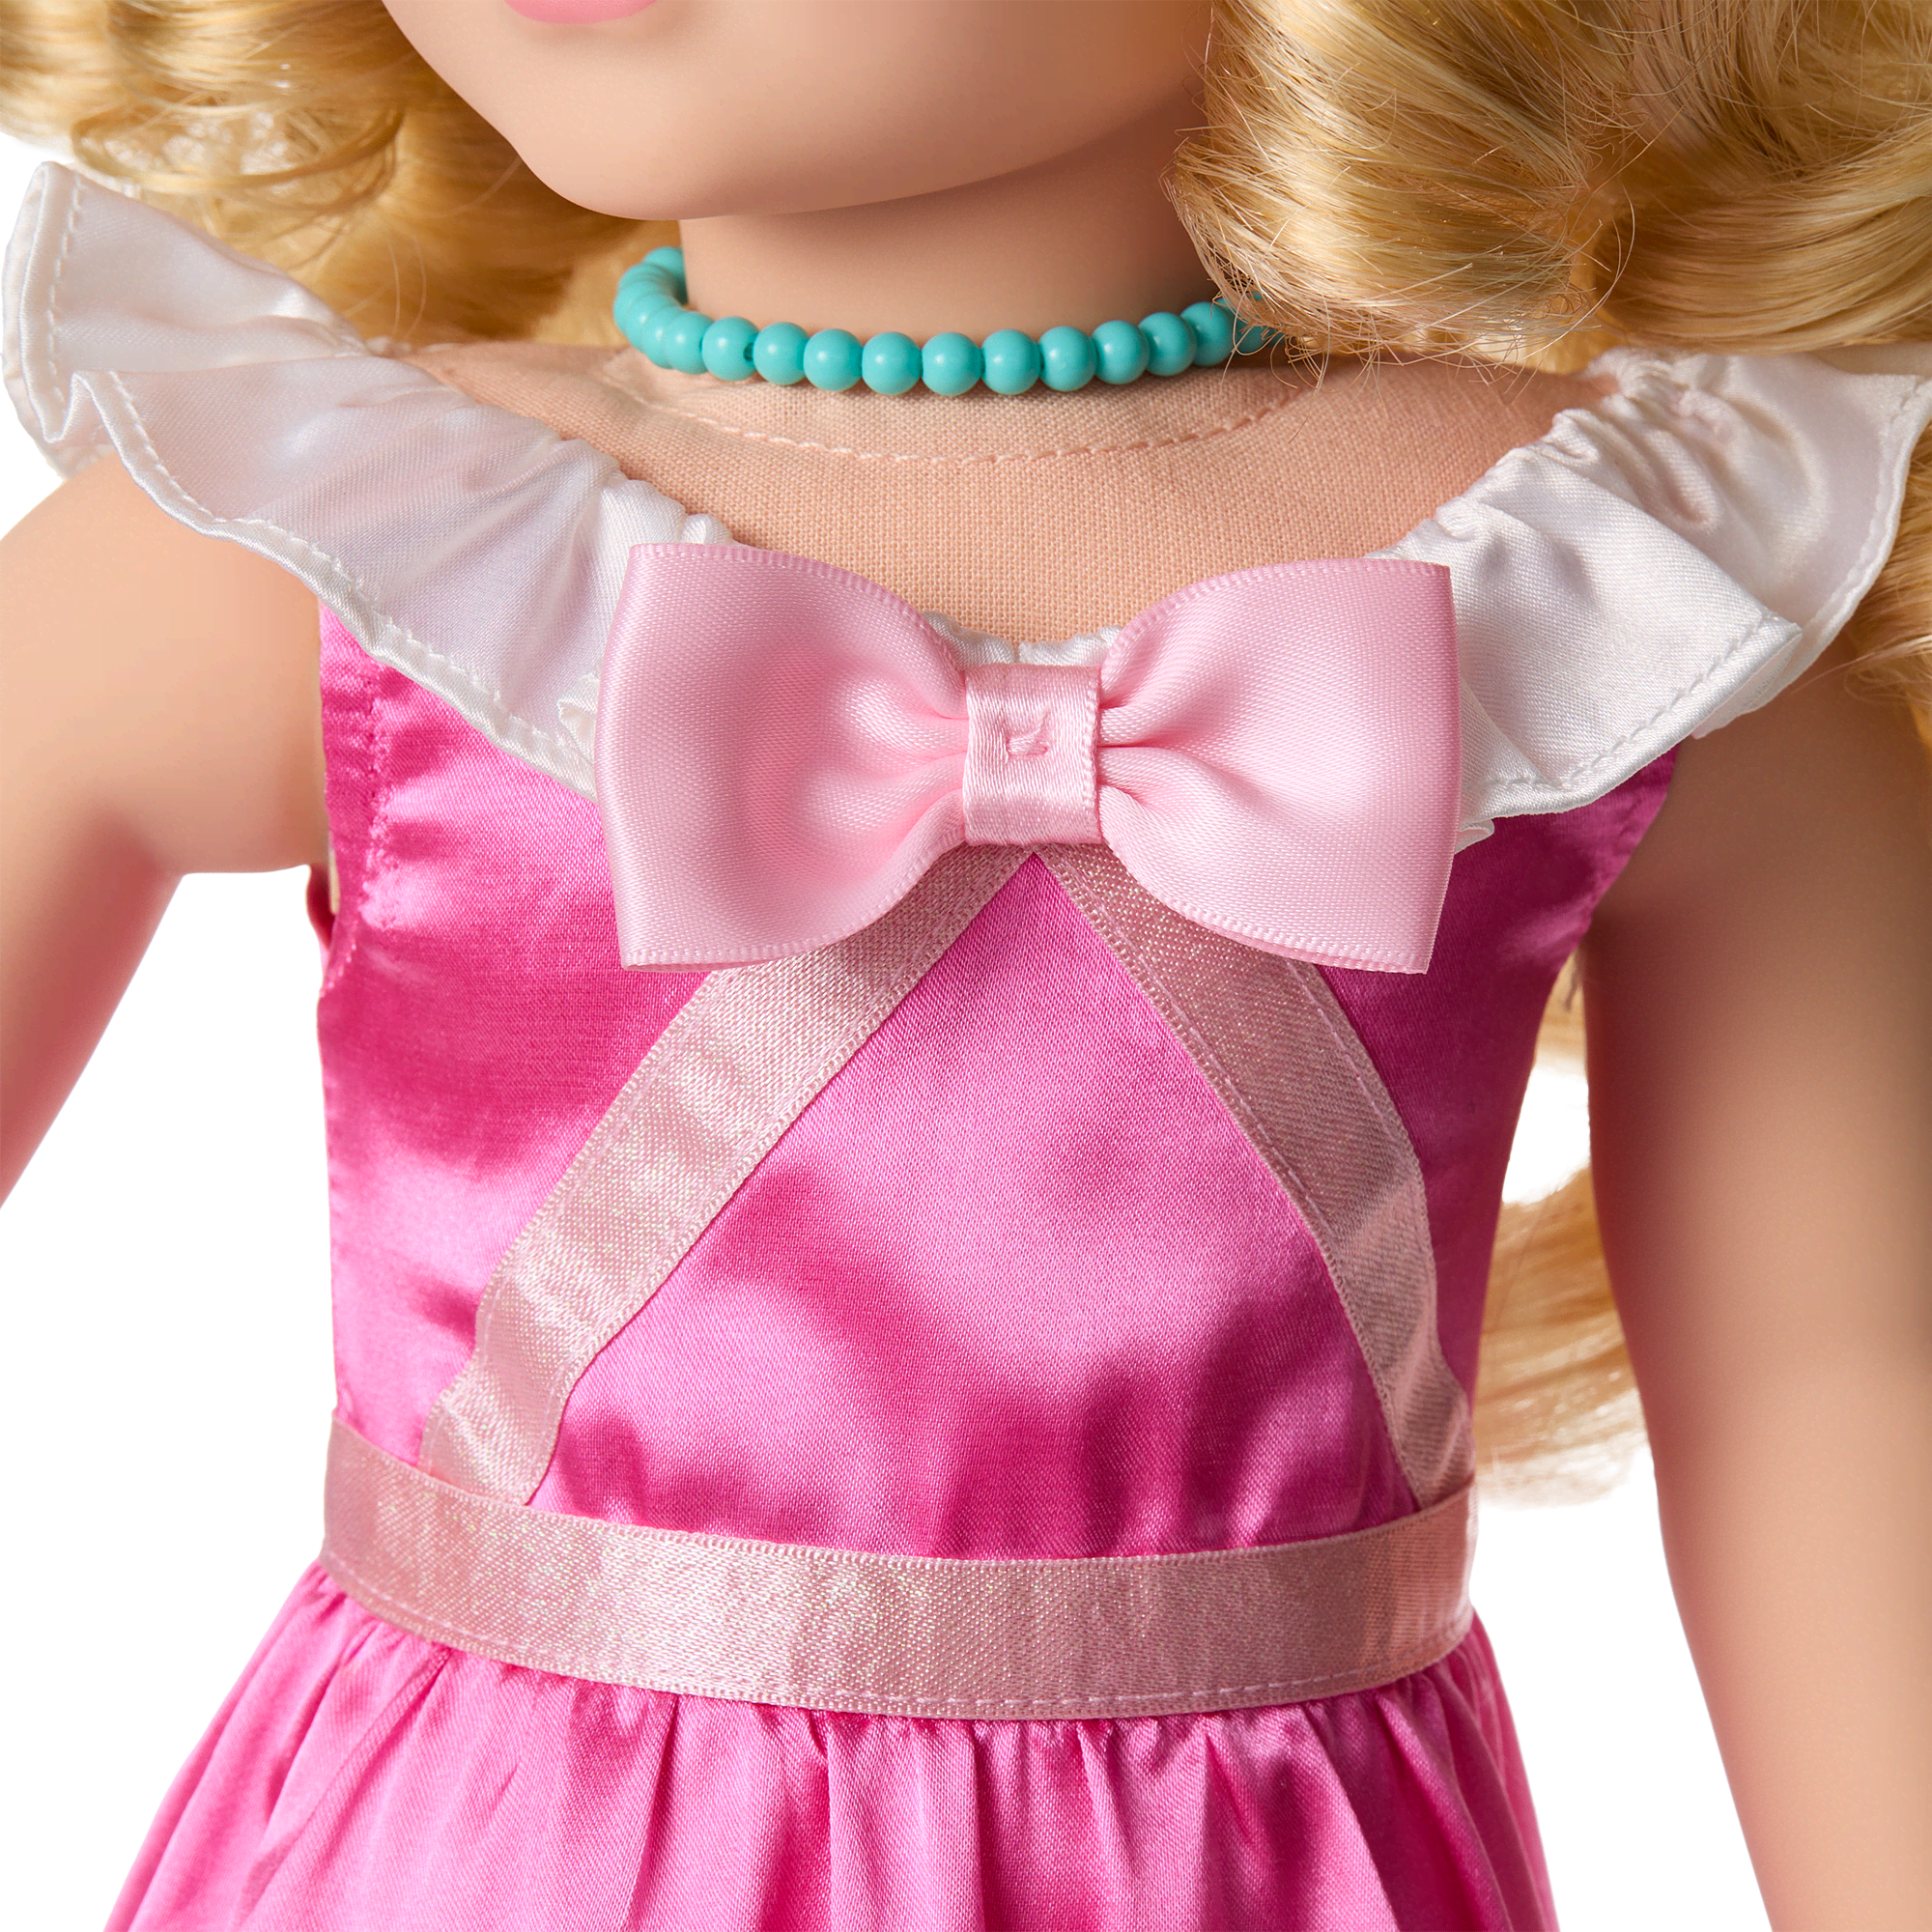 American Girl® Disney Princess Cinderella Original Ball Gown & Accessories for 18-inch Dolls